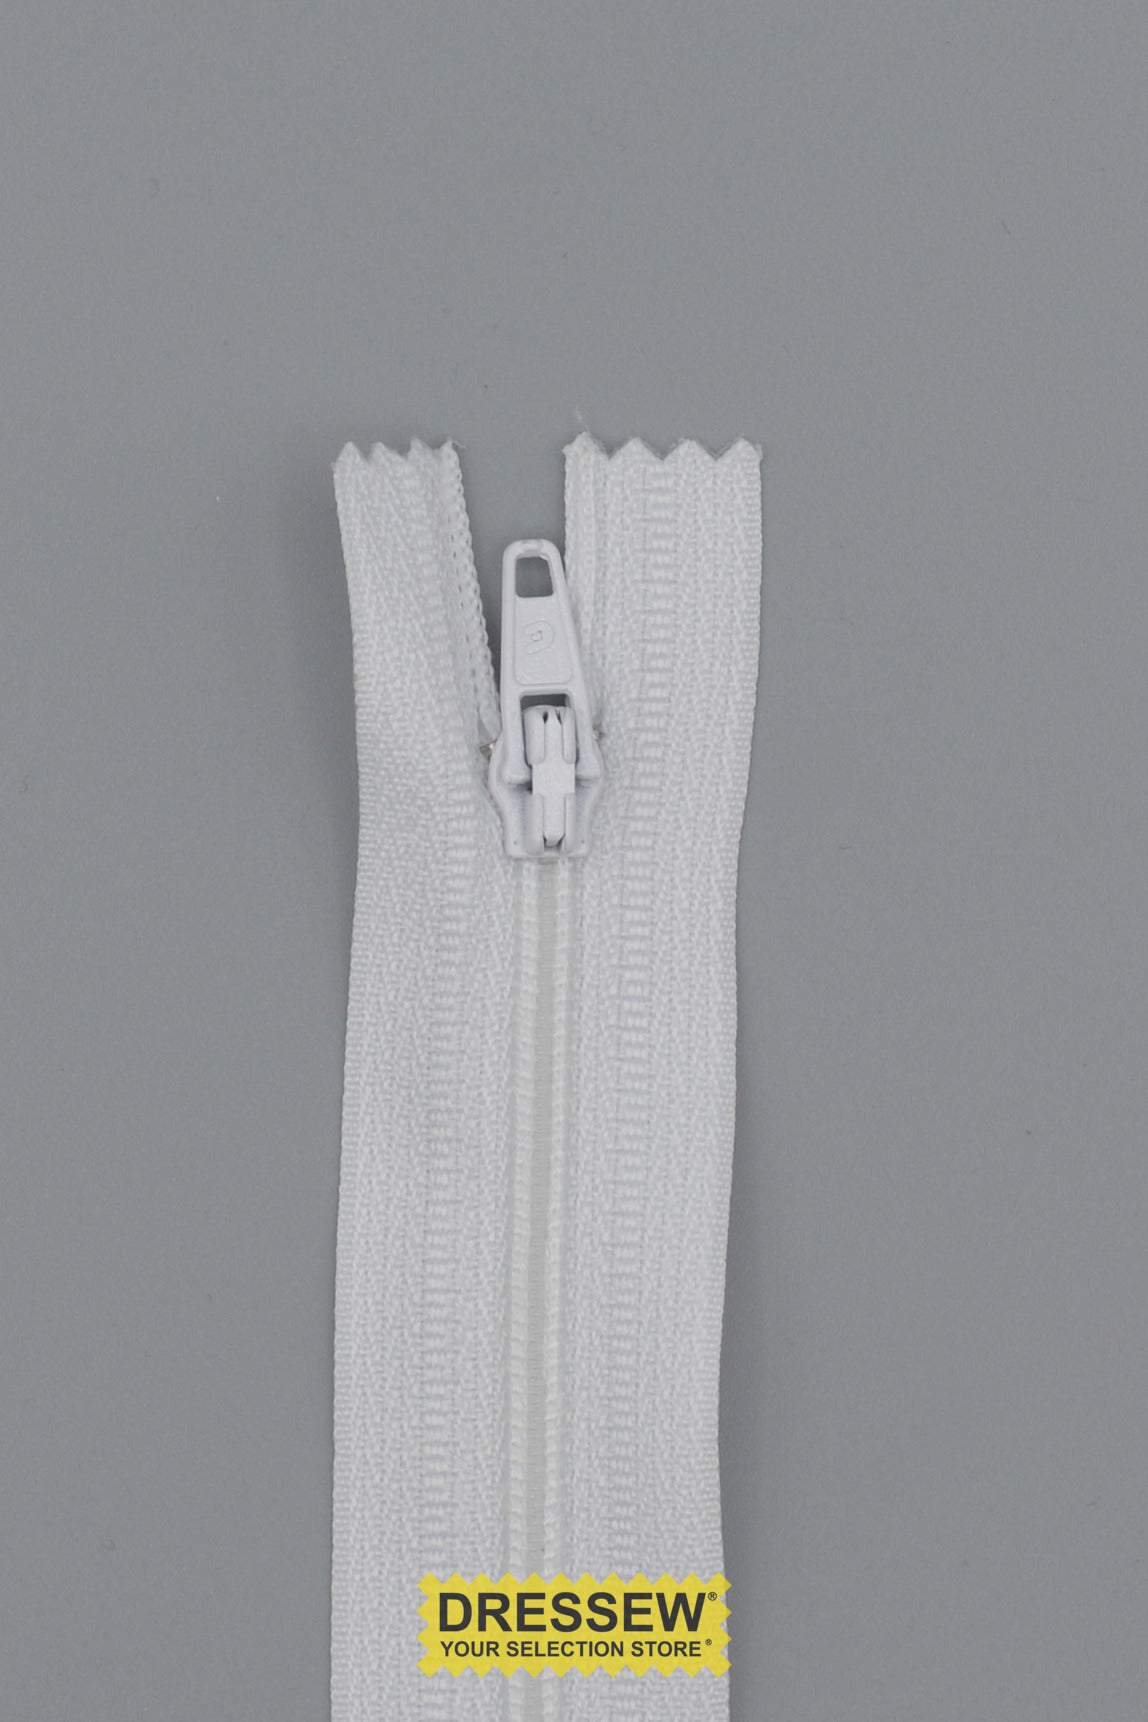 #3 Fine Coil Closed End Zipper 45cm (18") White